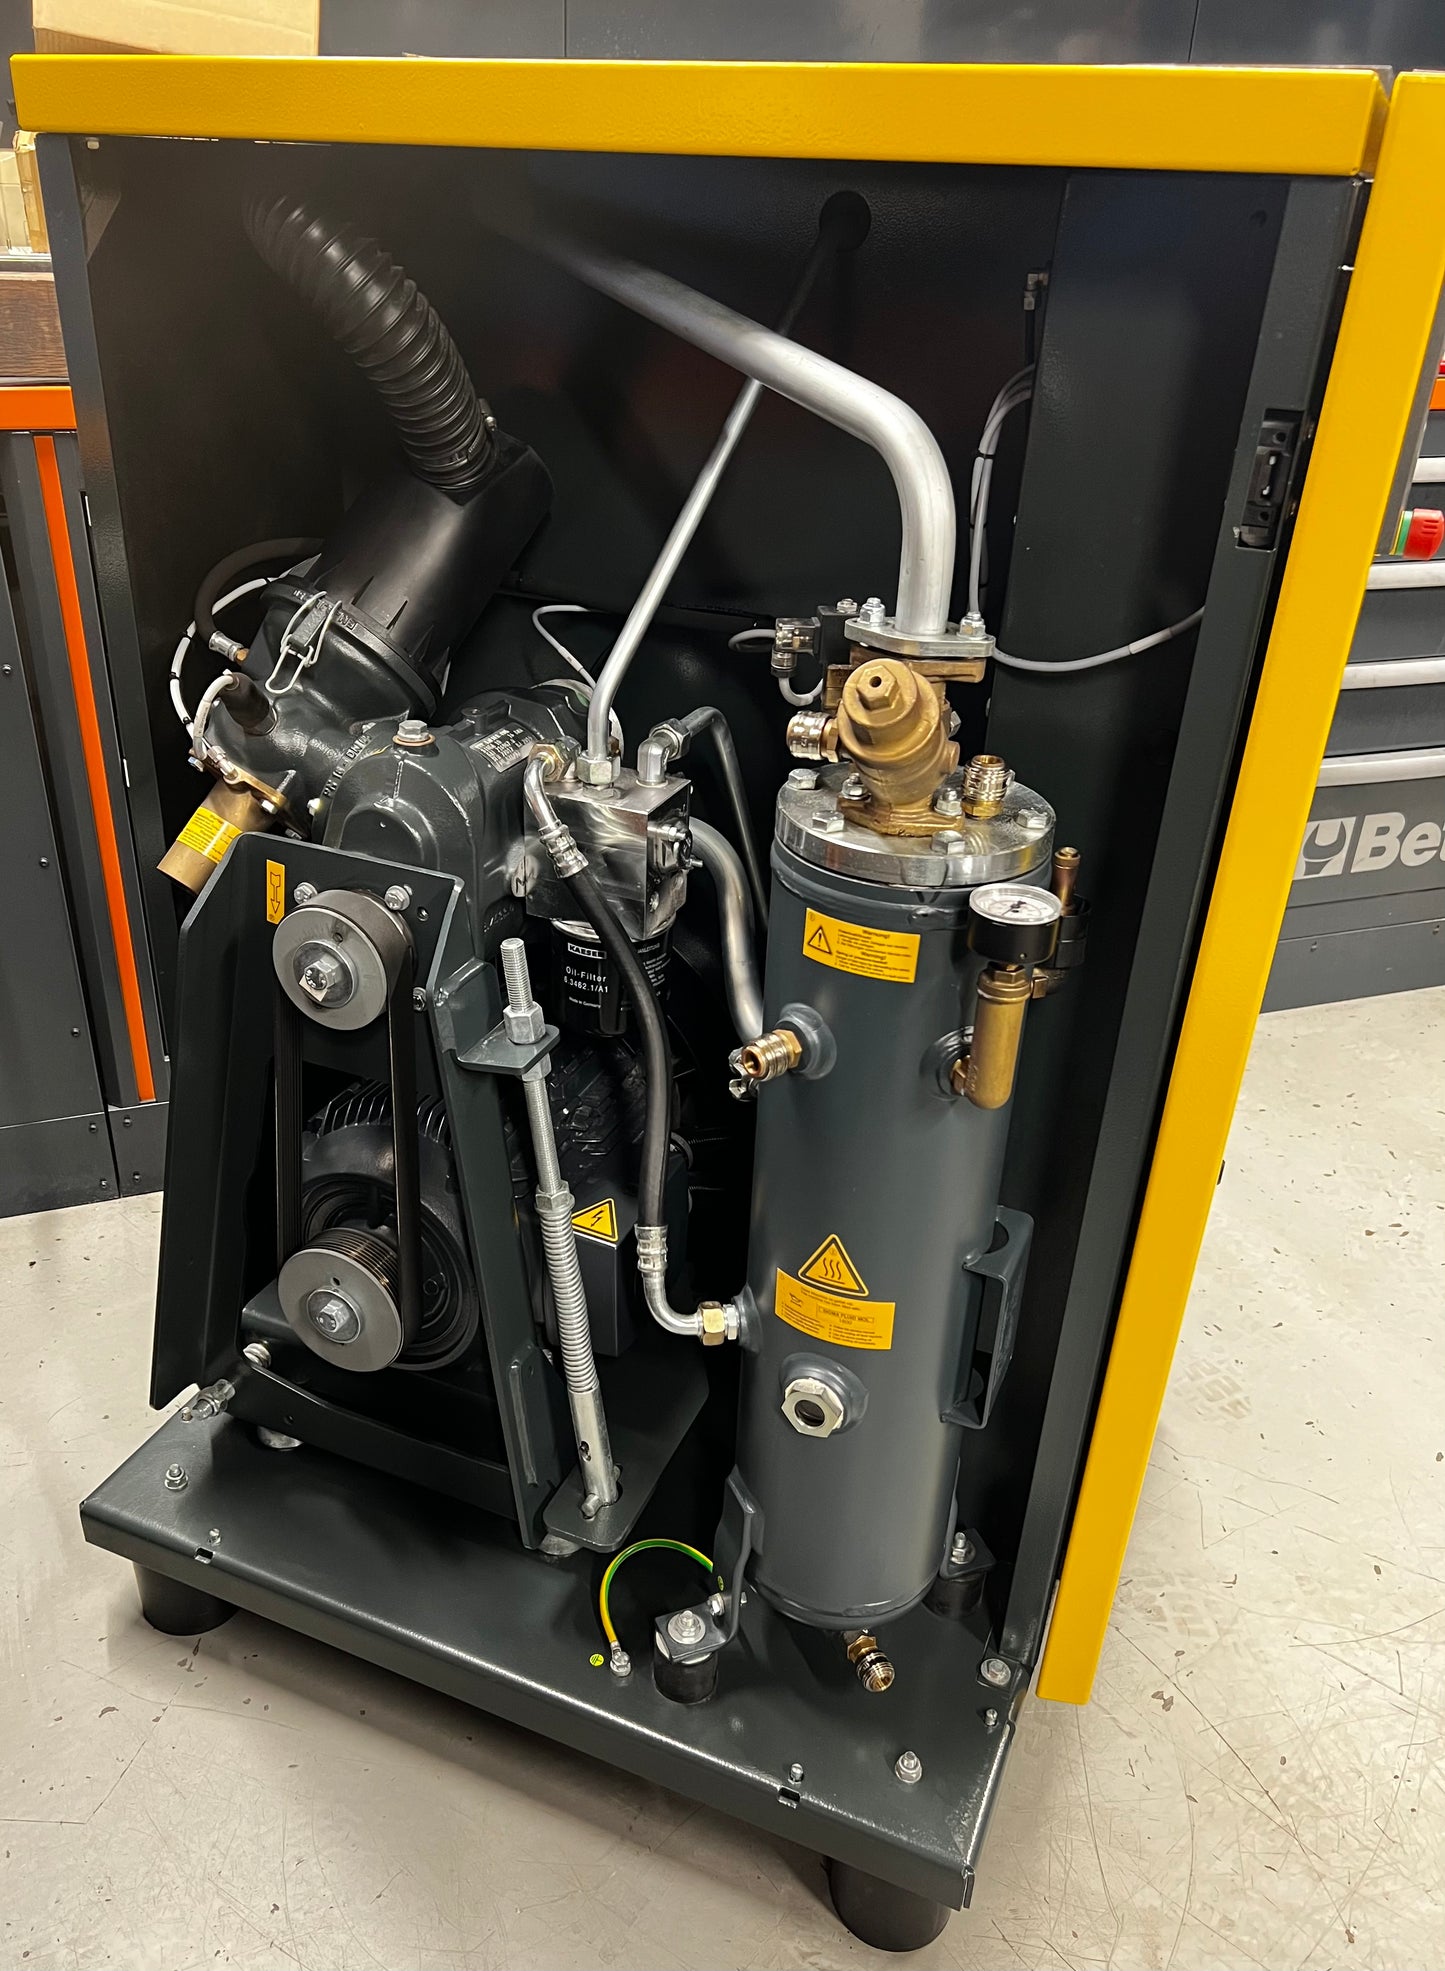 HPC / Kaeser SK22 Rotary Screw Compressor (11Kw, 15HP, 70CFM, 8Bar)